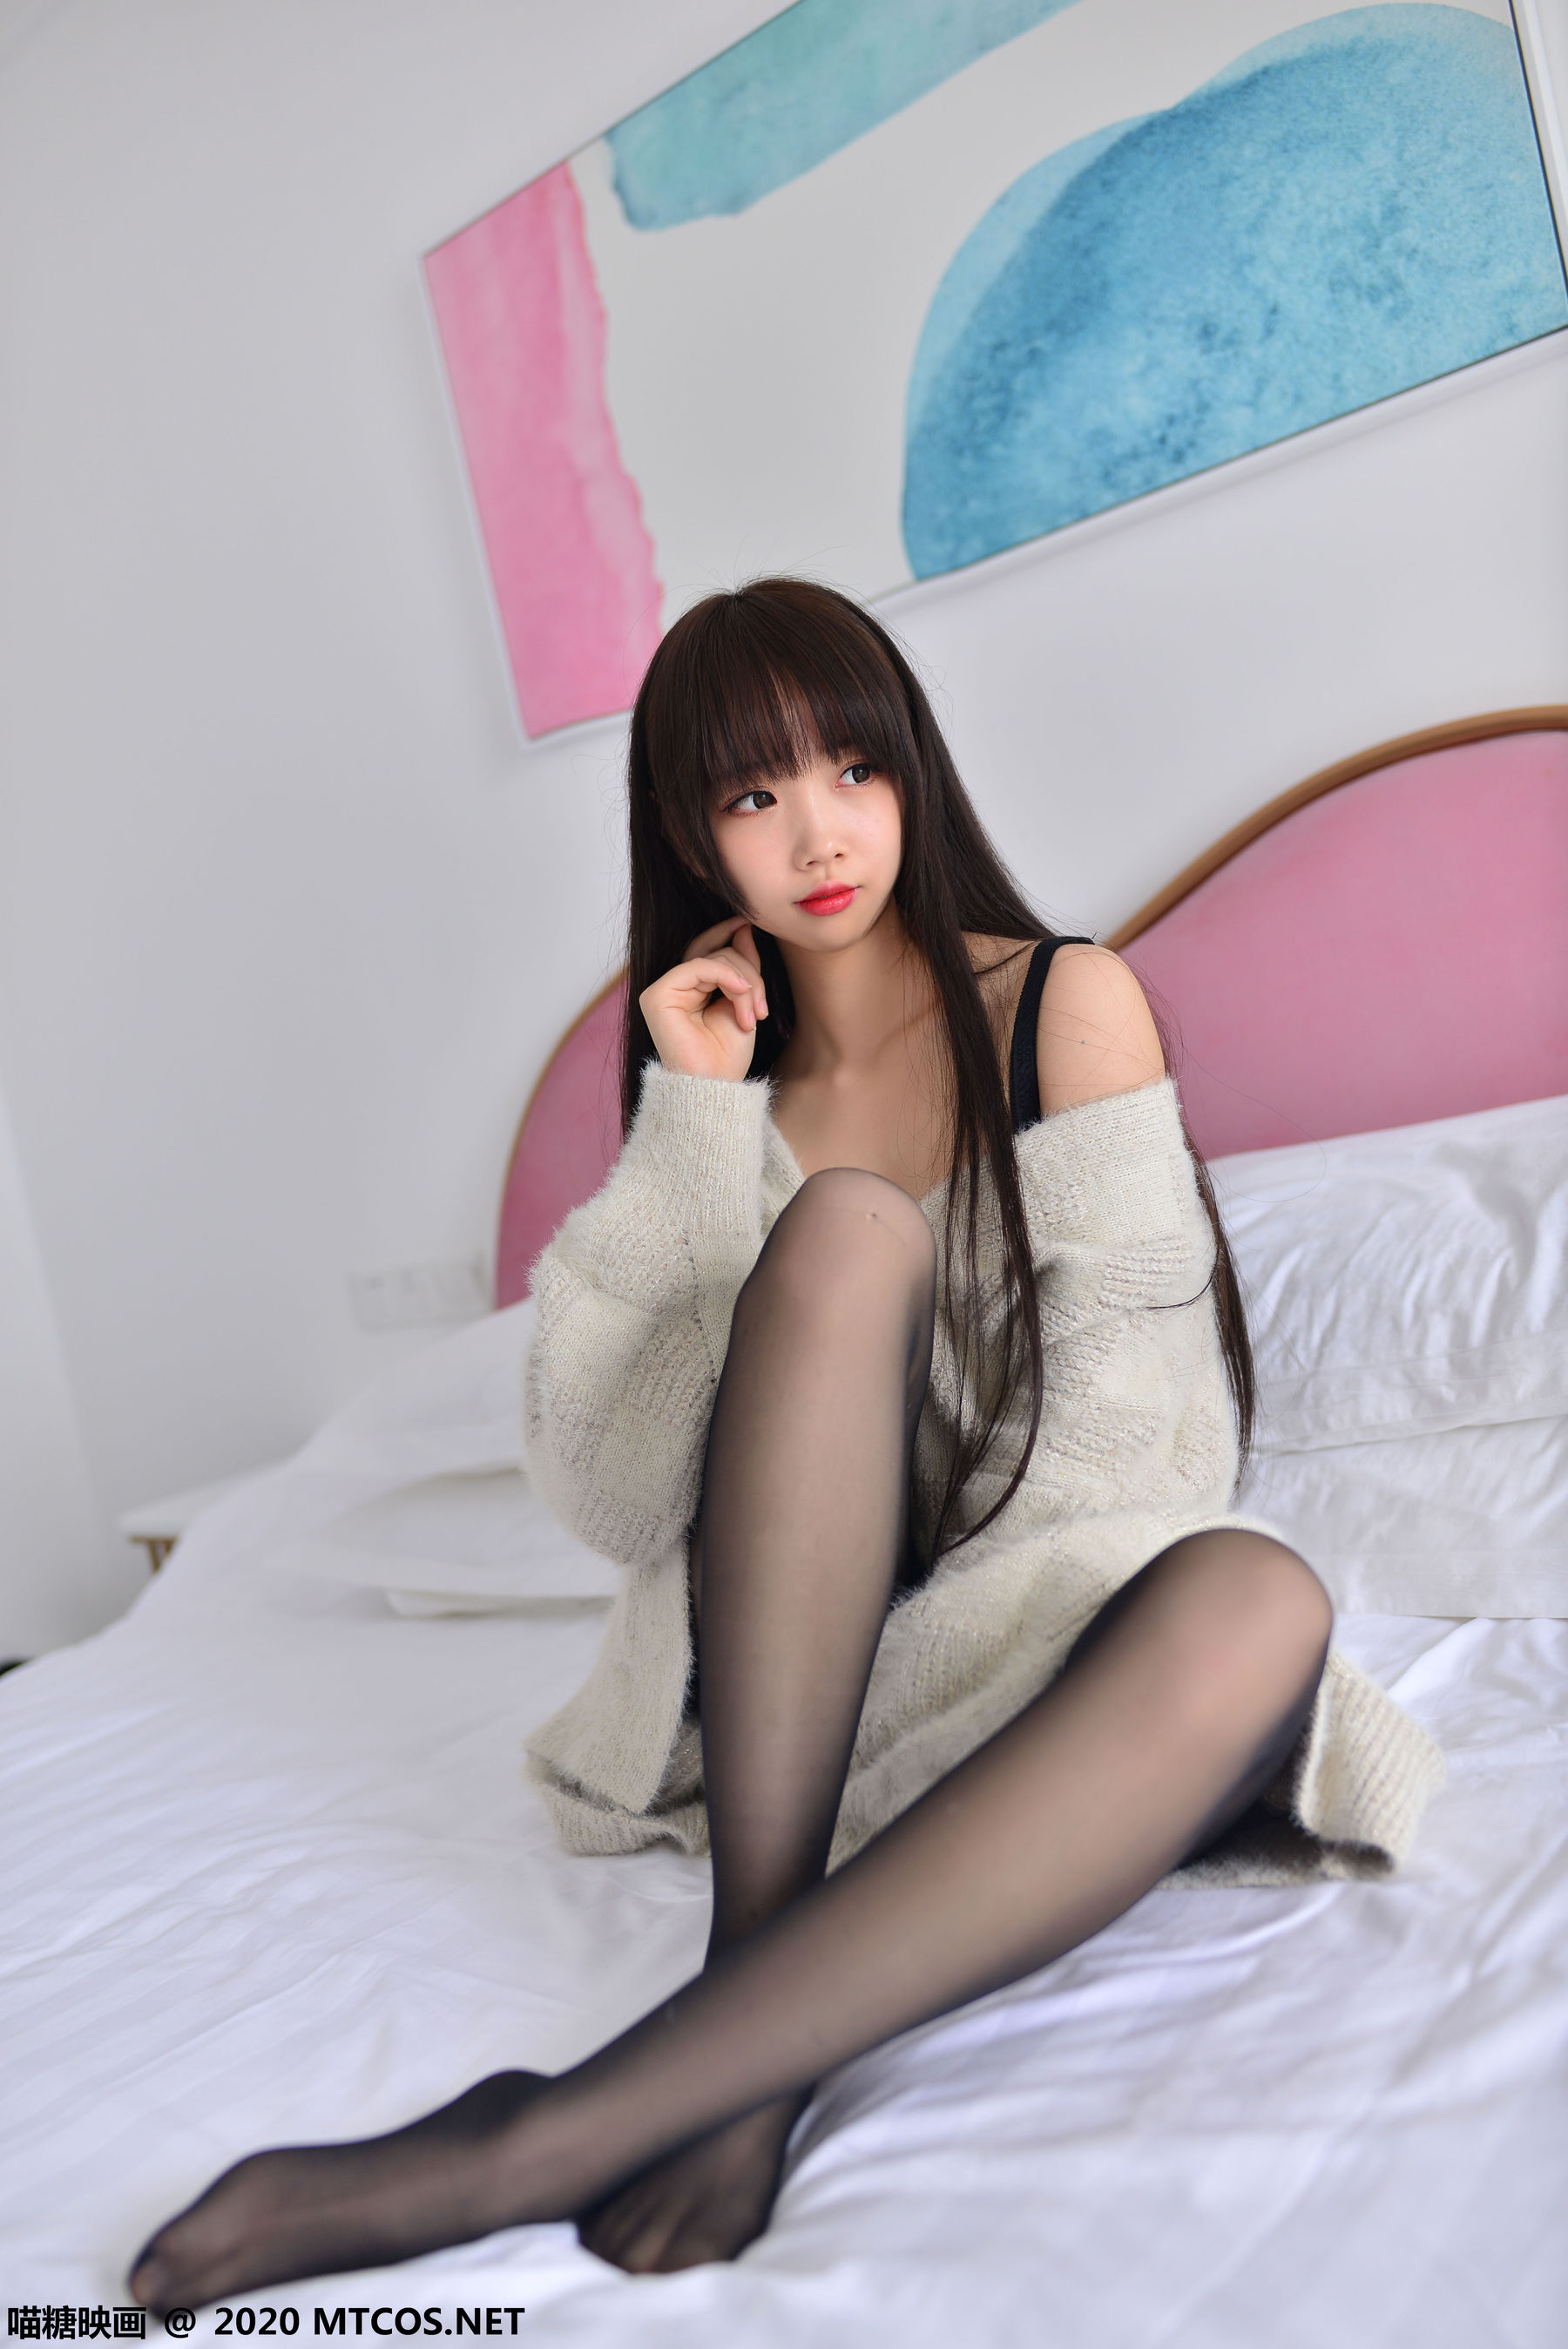 [糖] Vol.277 sweater girl photo set